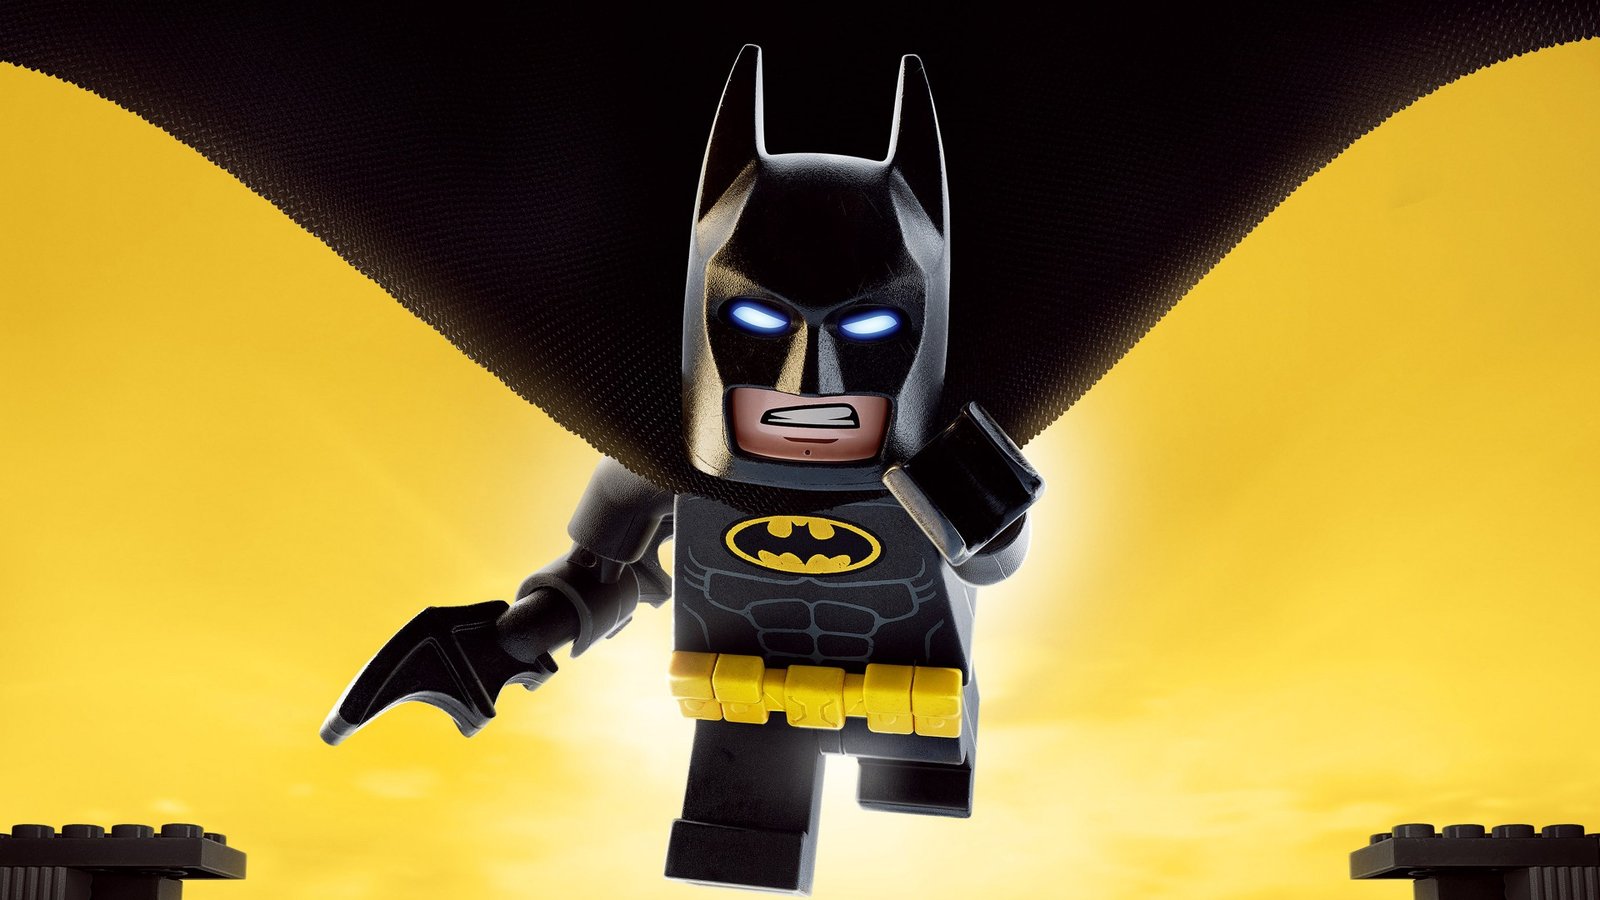  / The Lego Batman Movie